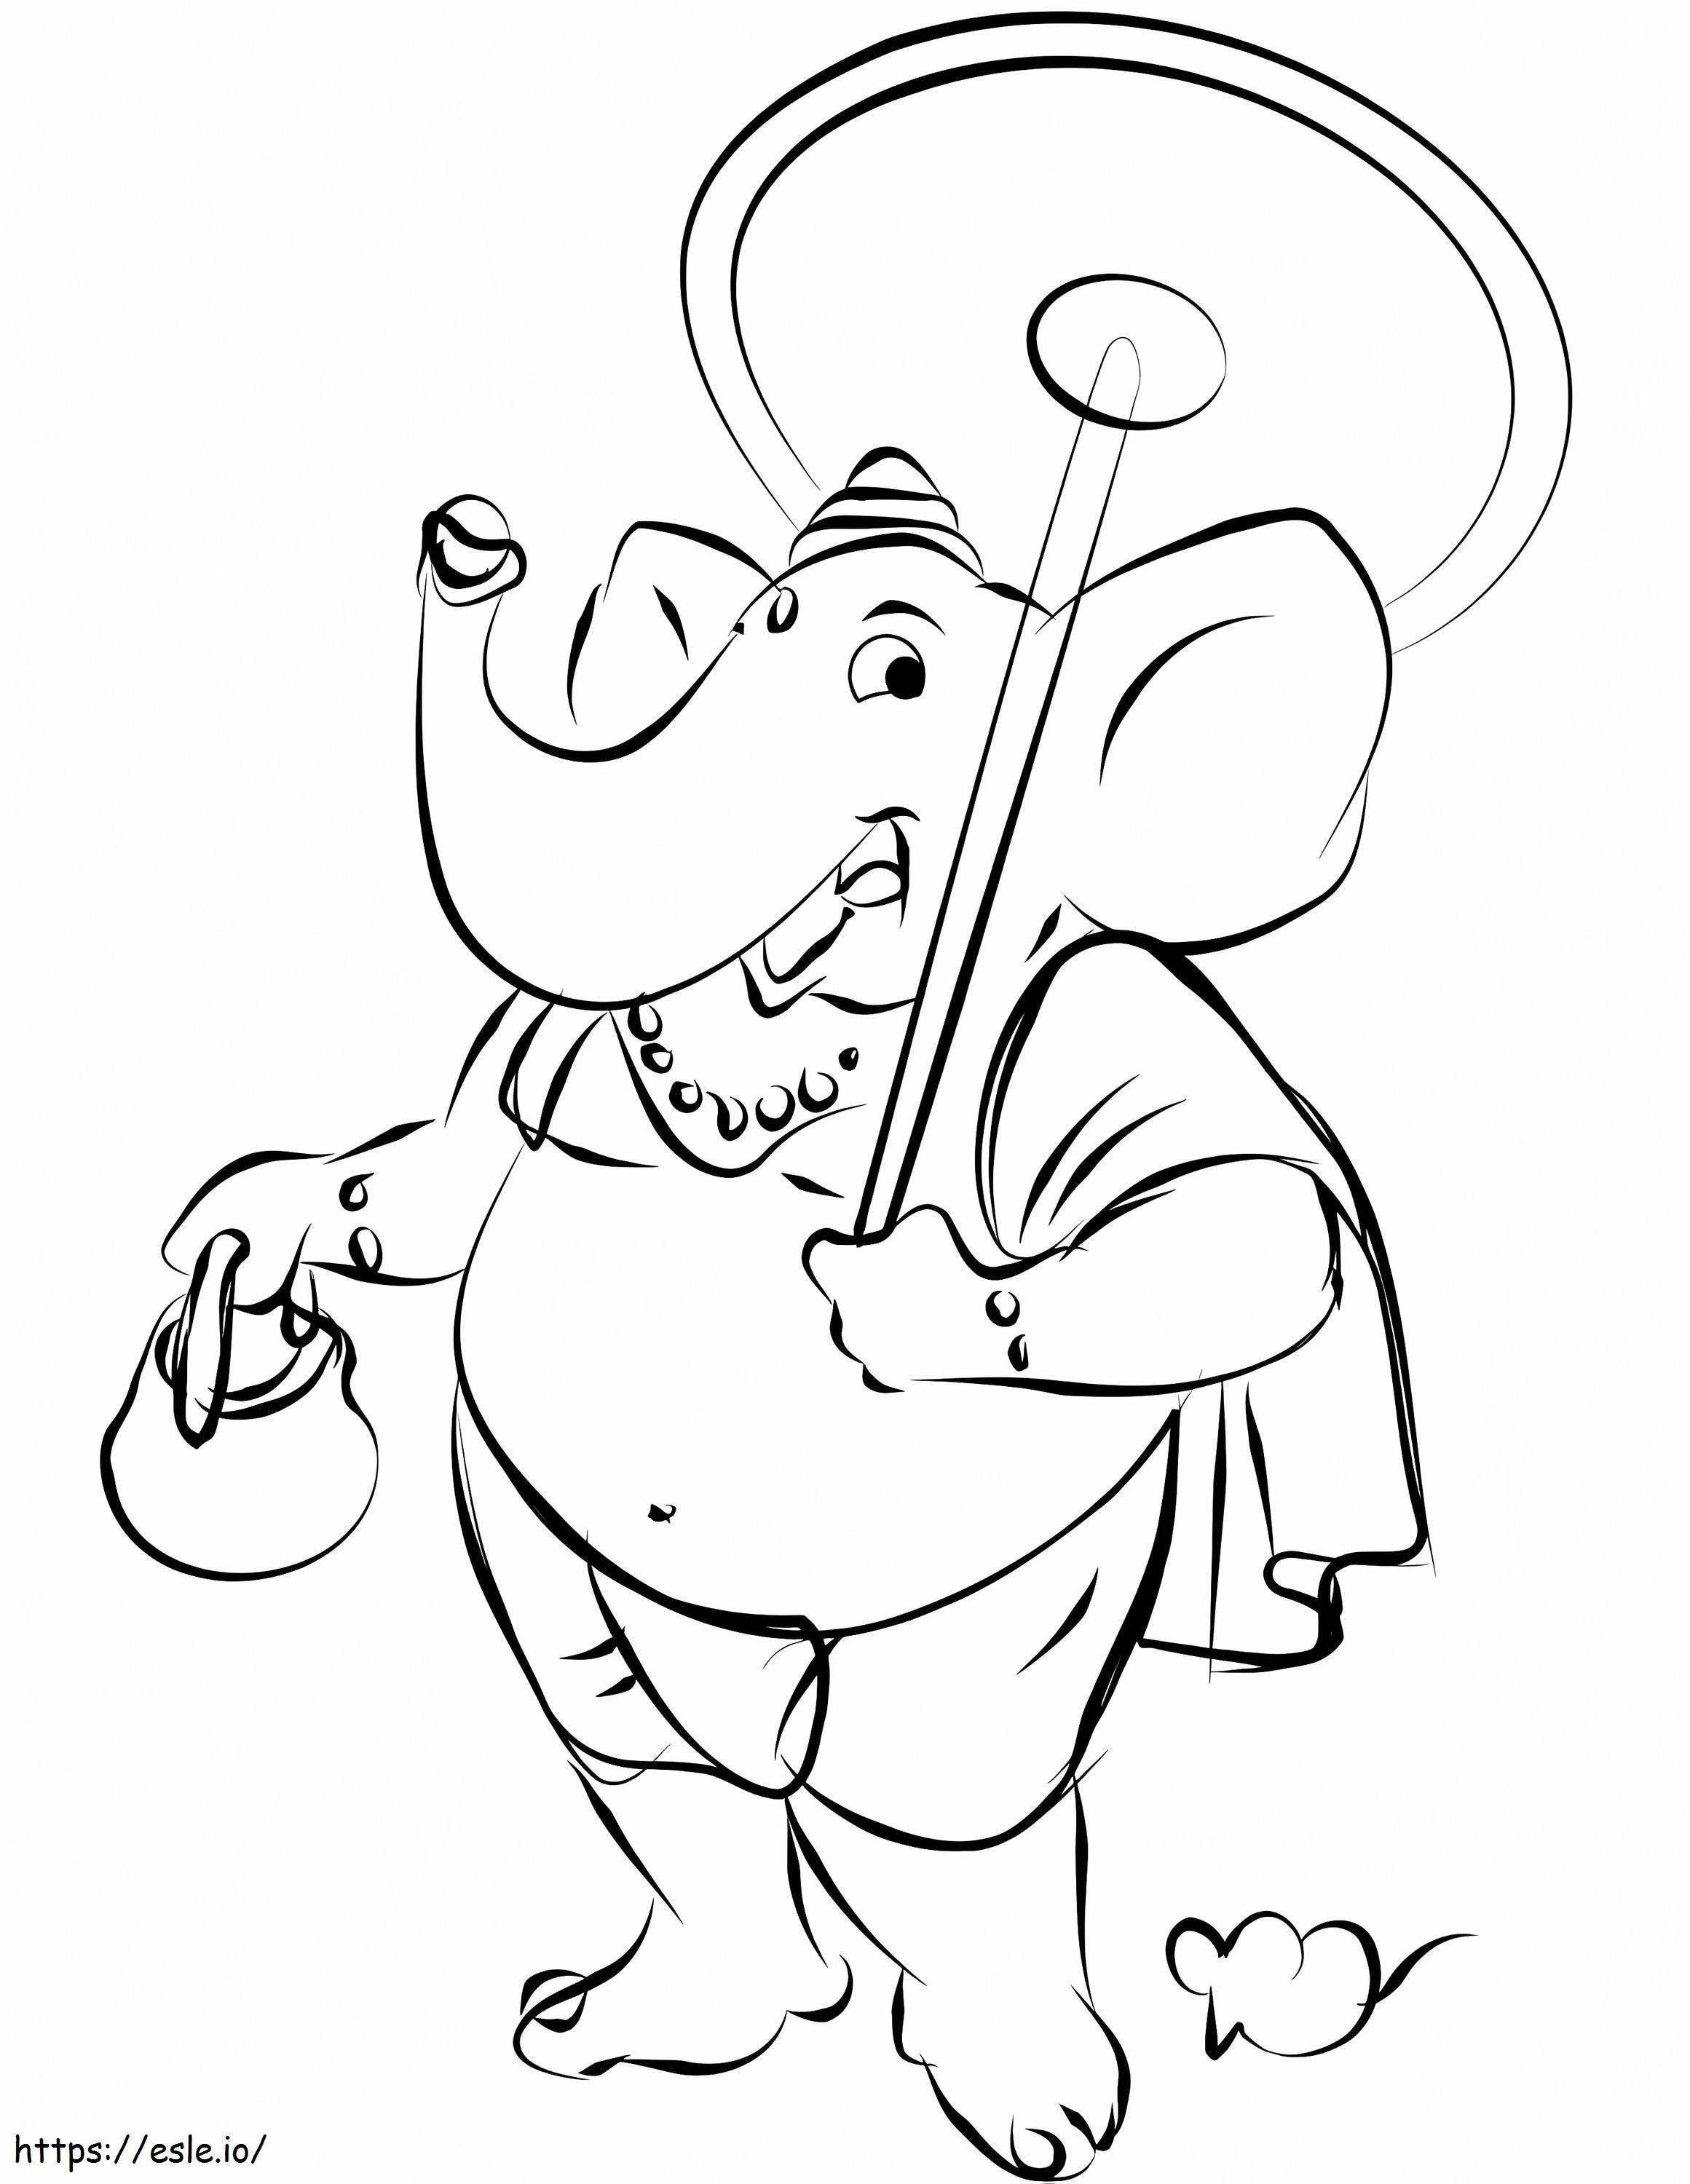 Cartoon Ganesha coloring page